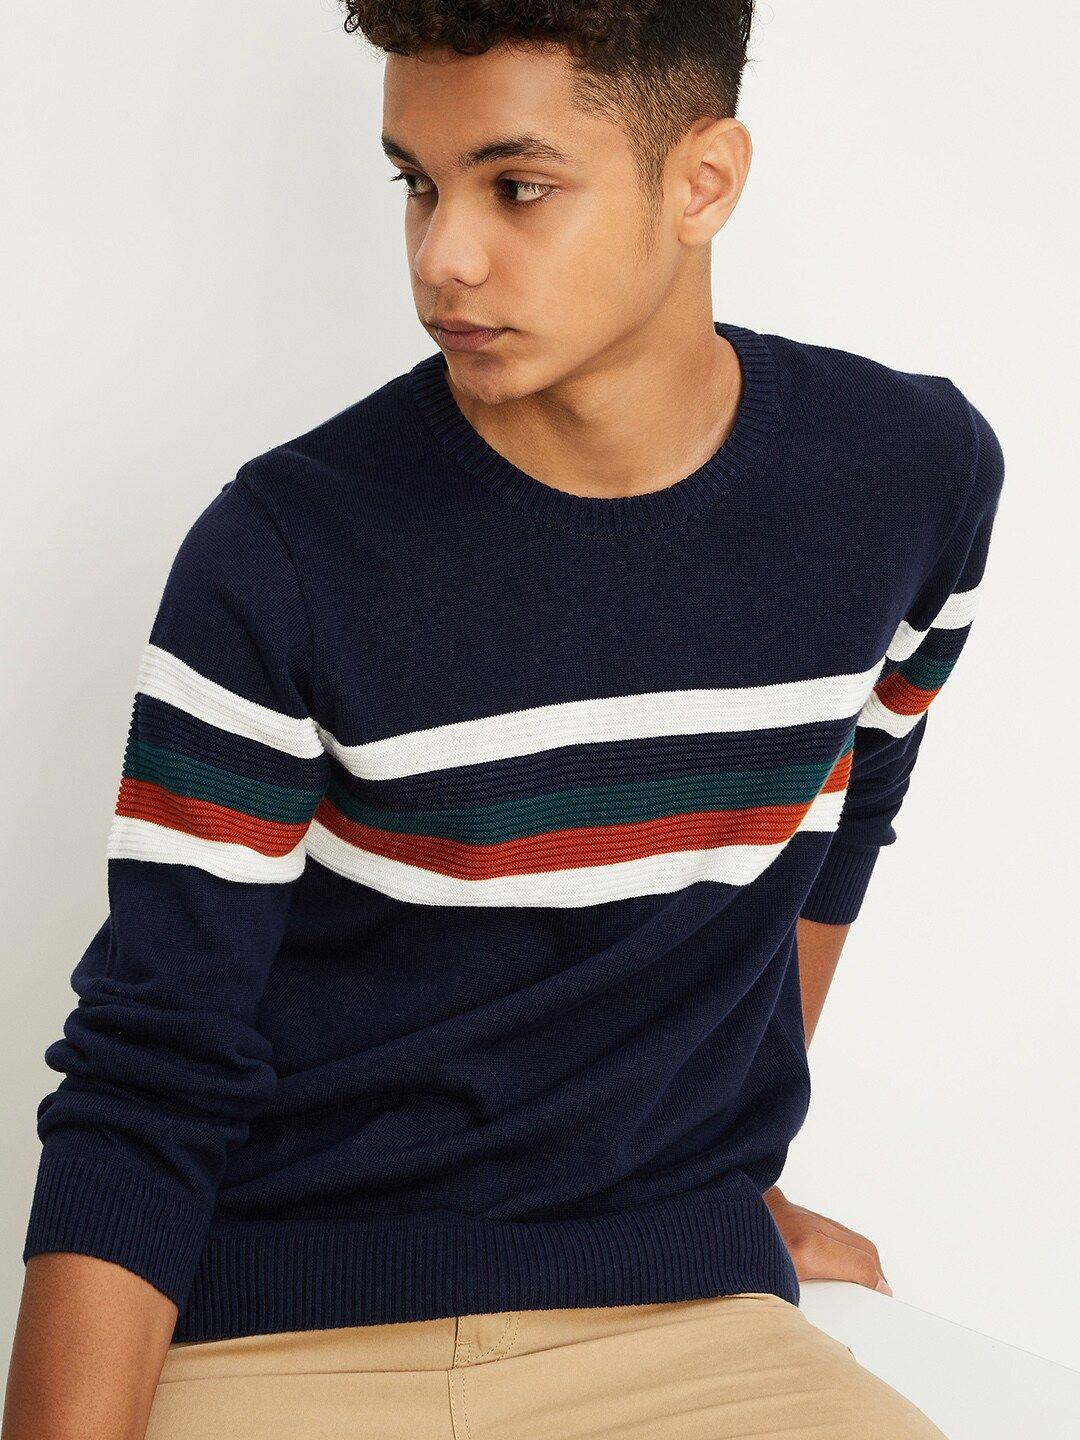 max Boys Navy Blue & White Striped Pullover